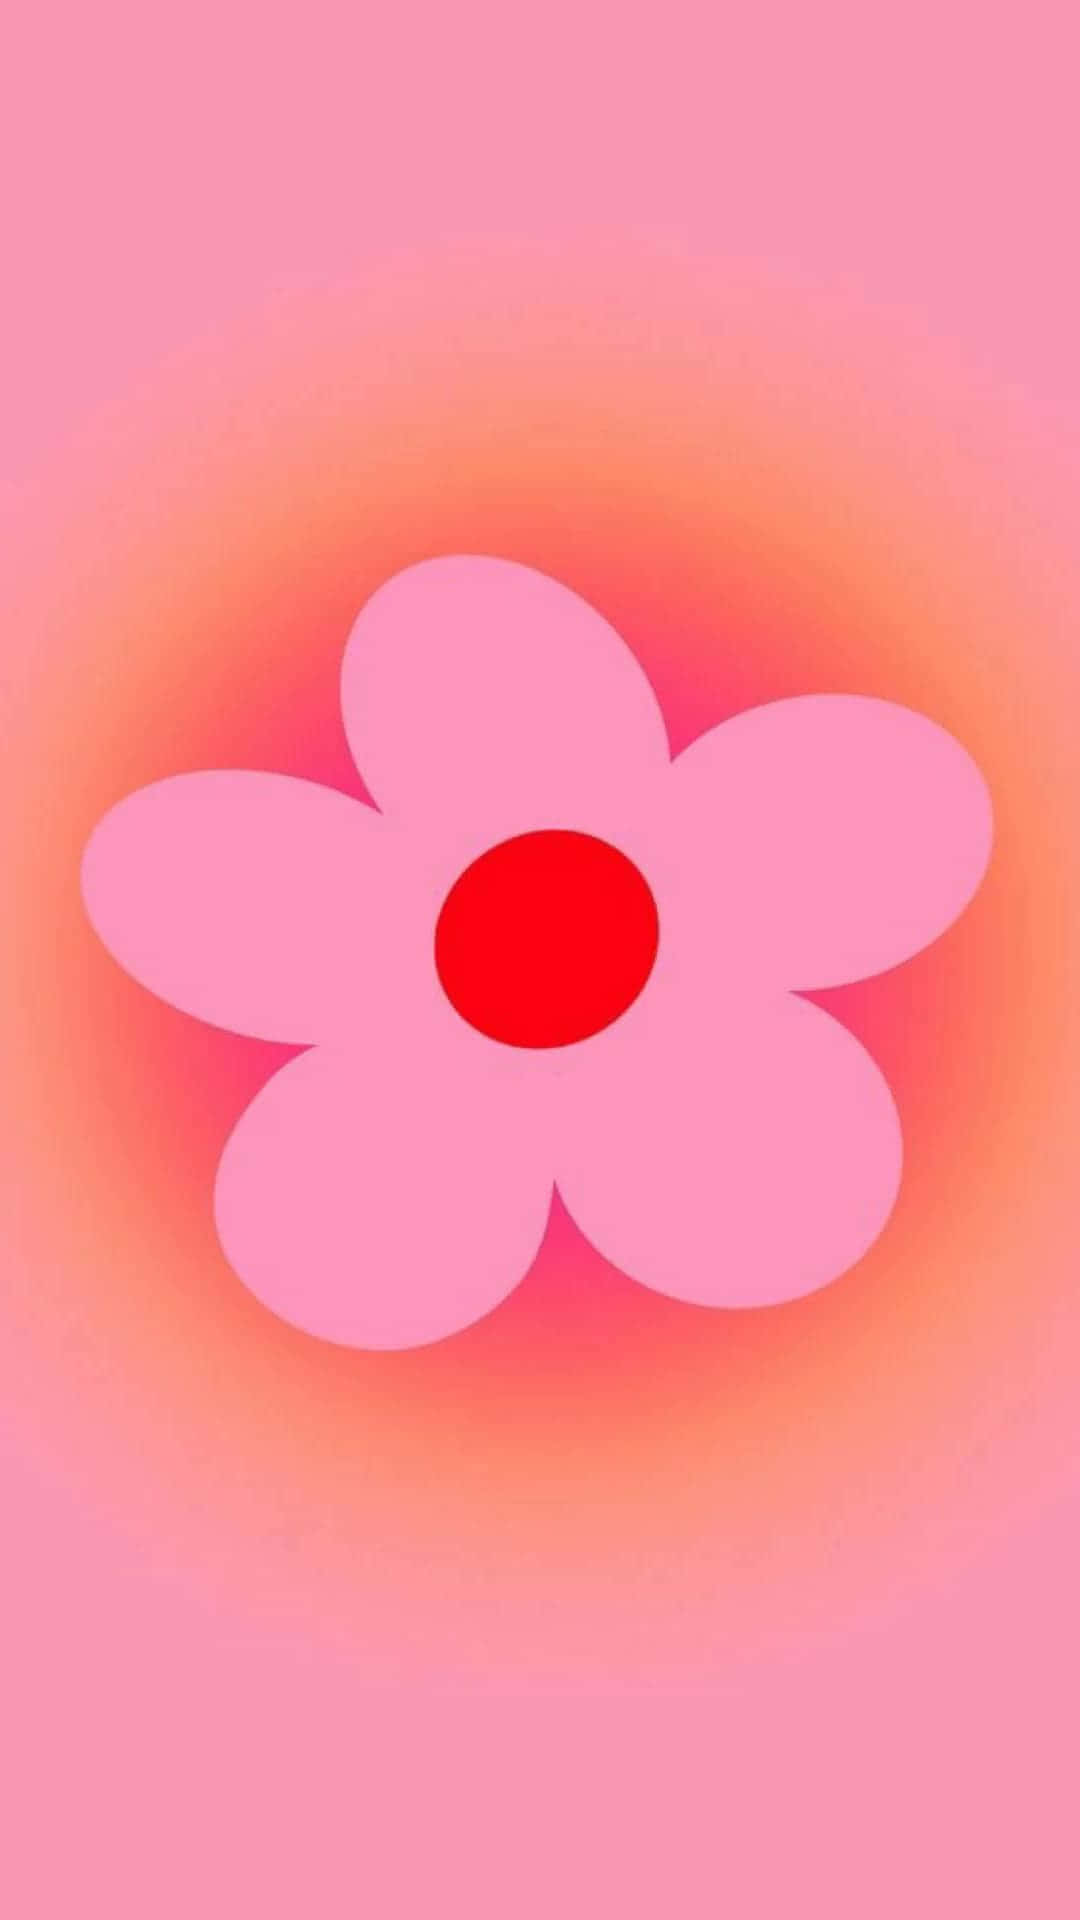 Abstract Pink Flower Illustration Wallpaper